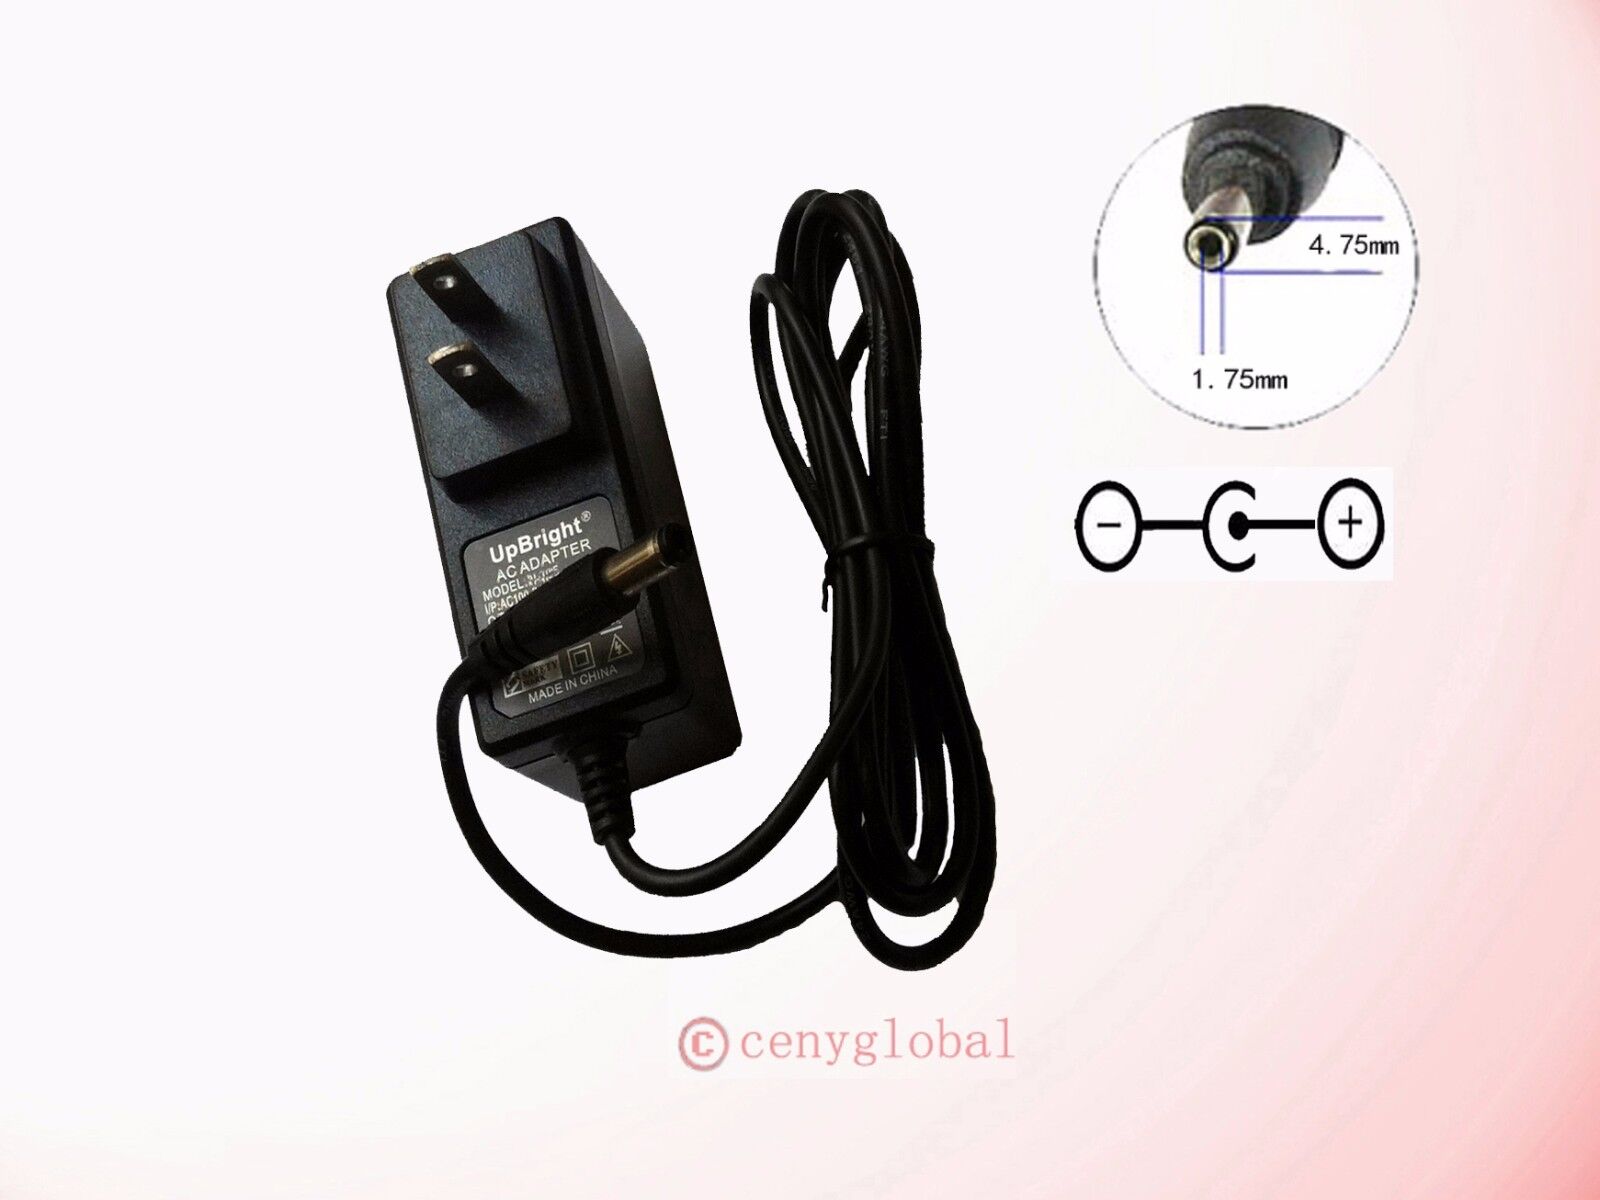 Global AC 100V-240V Converter Adapter DC Power Supply Plug 4.75mm x 1.75mm Serie